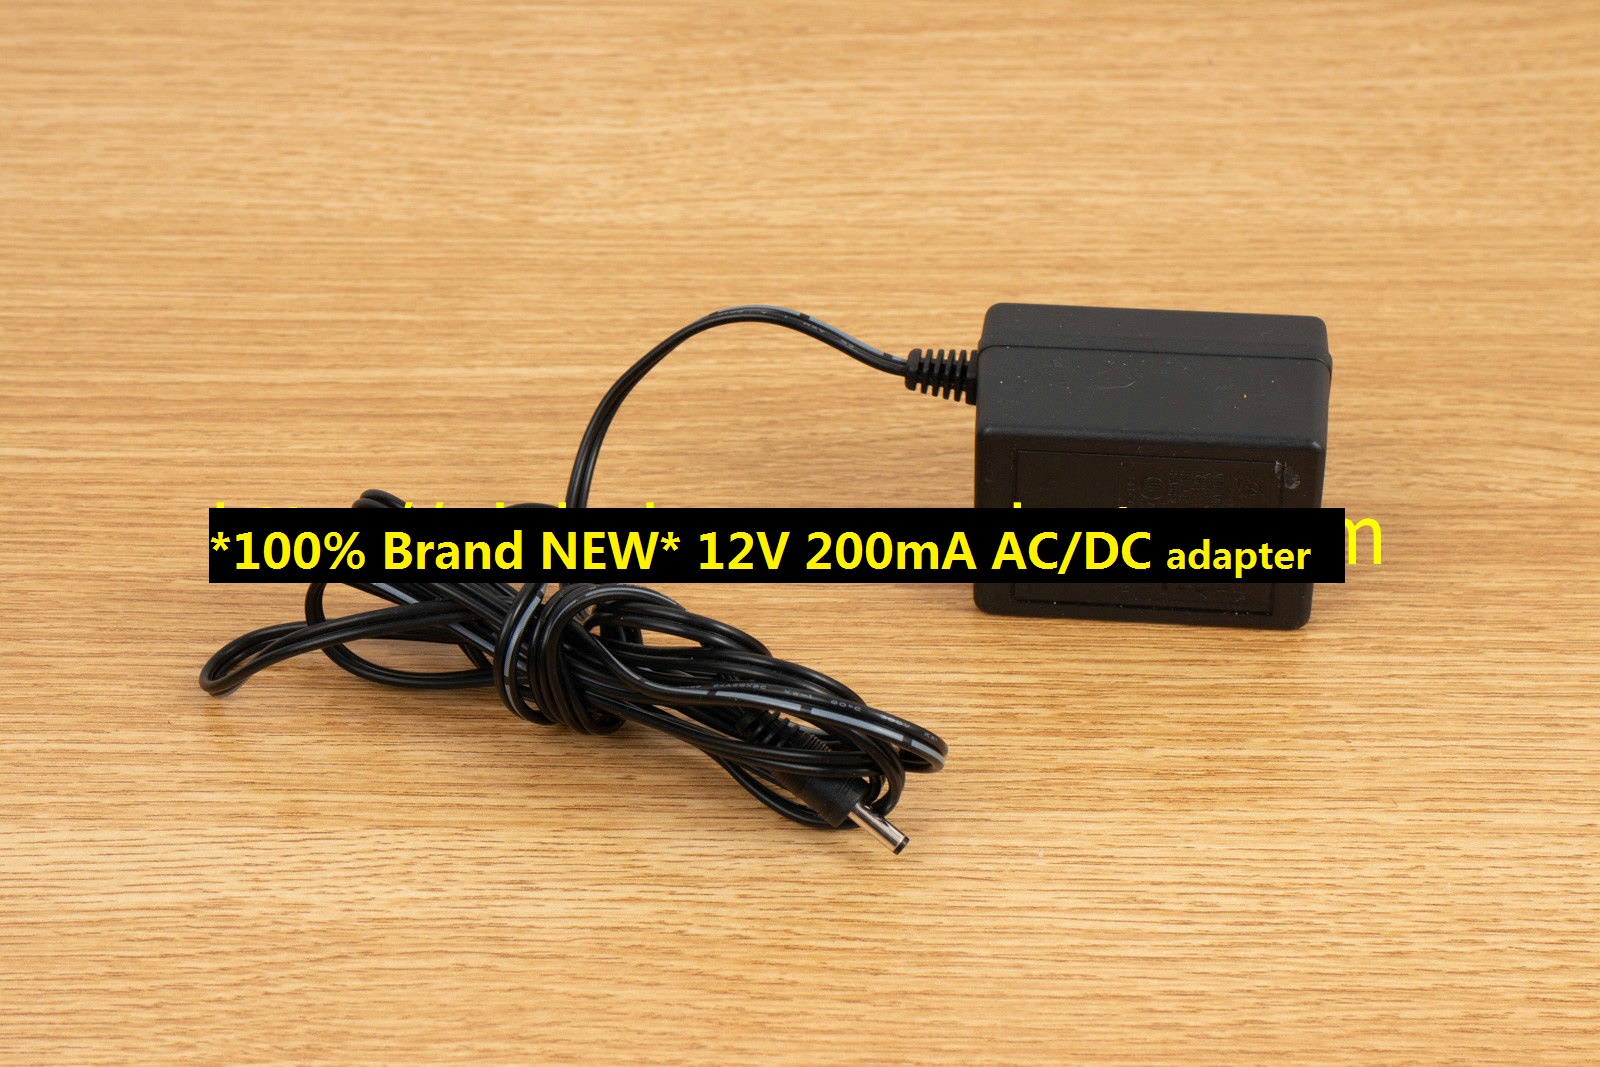 *100% Brand NEW* AC Adapter 12V 200mA AC/DC Midland DPX351328 Power Supply